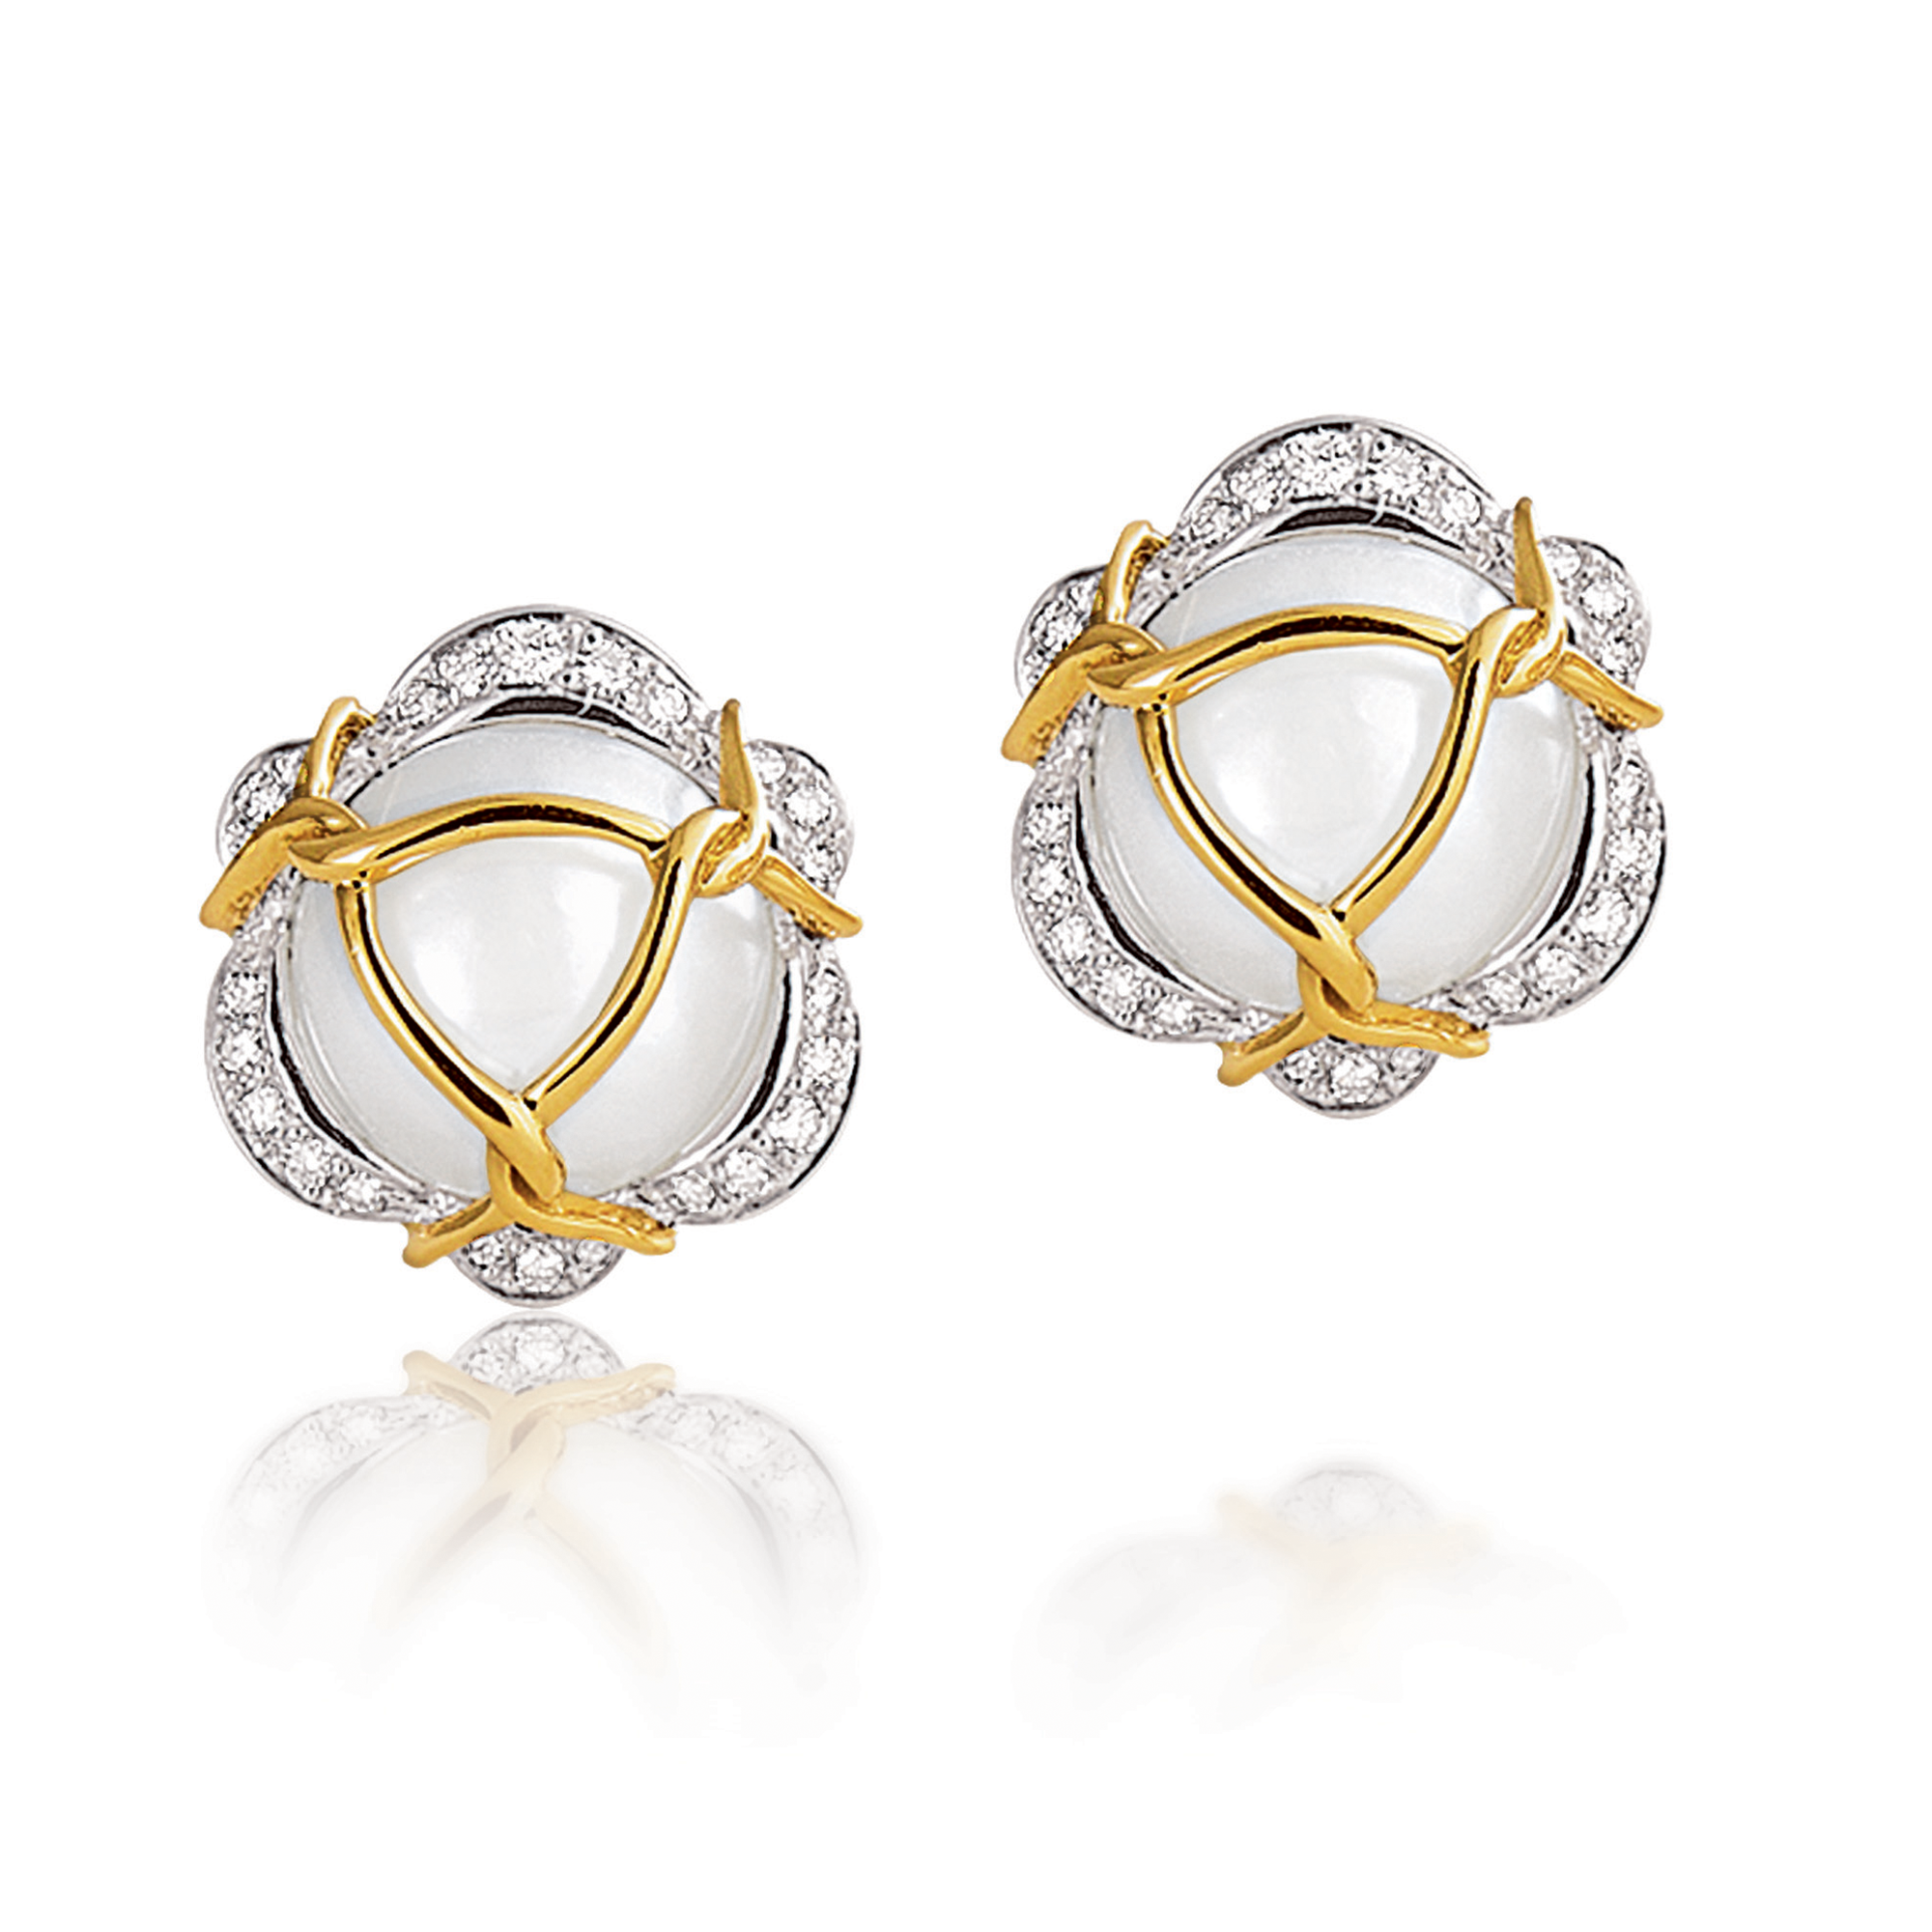 Diana Earclips in pearl-diamond-gold